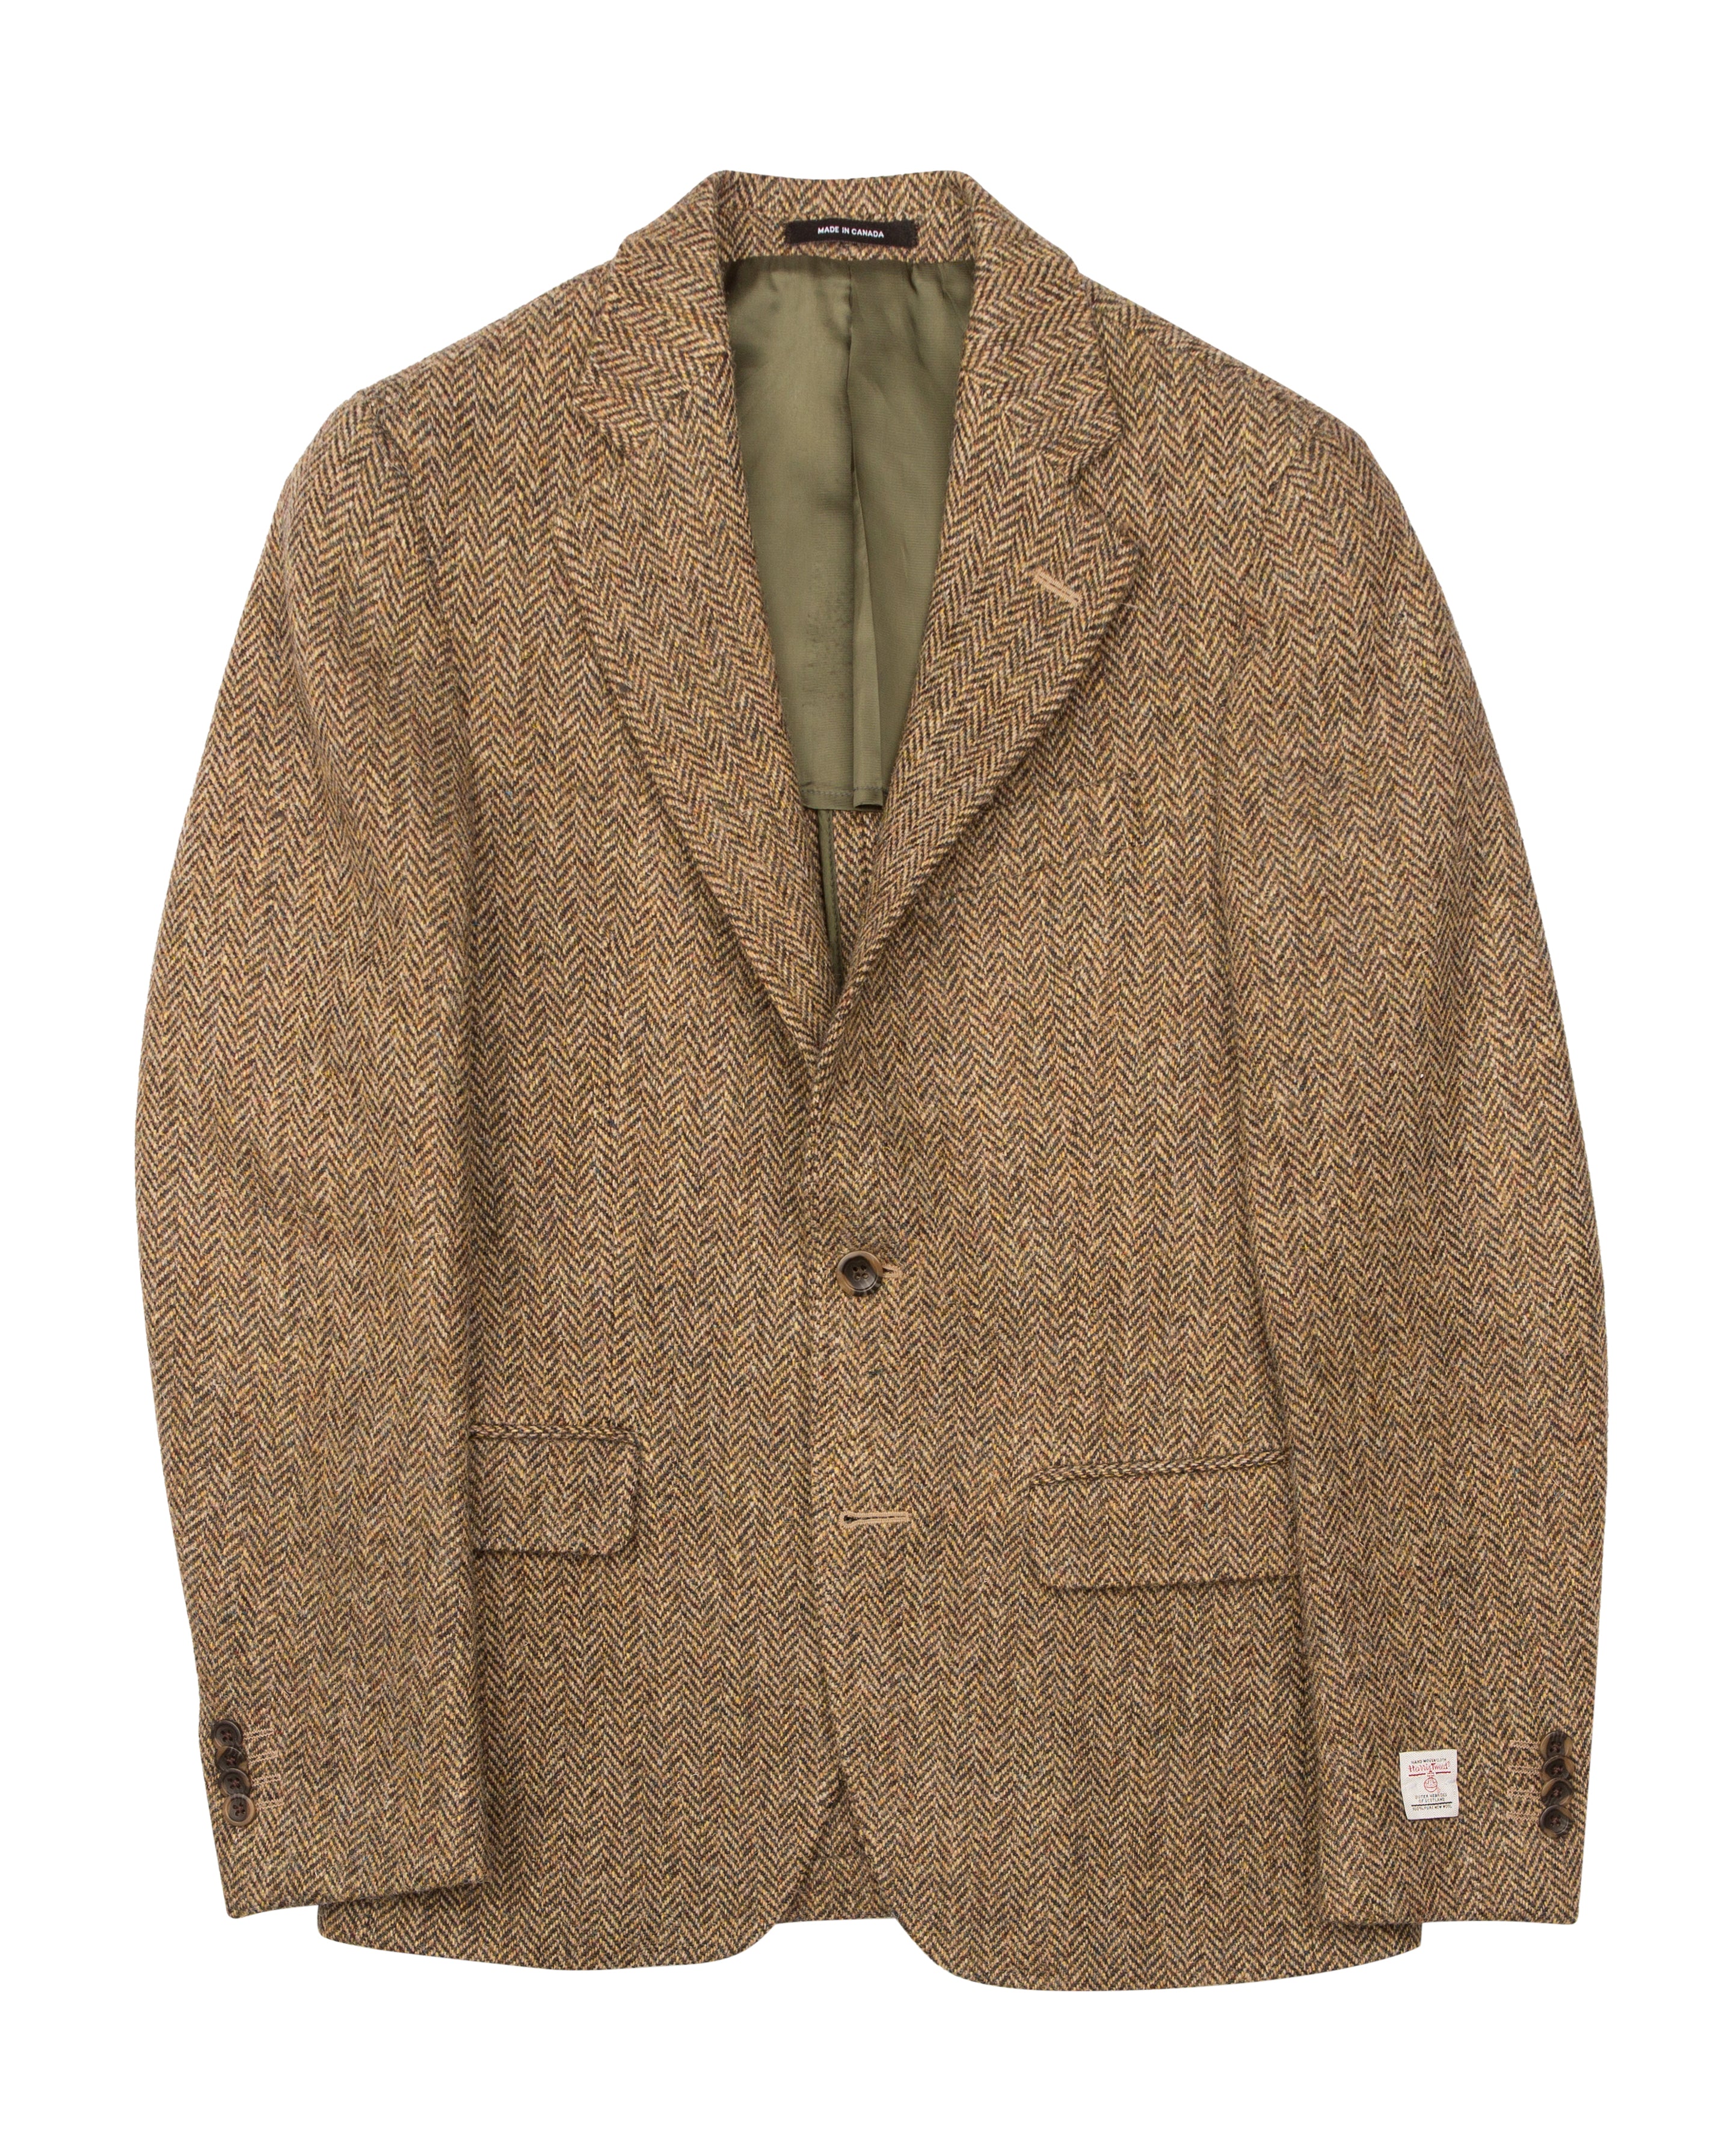 Harris Tweed Jacket | Third Son Tailor Shop